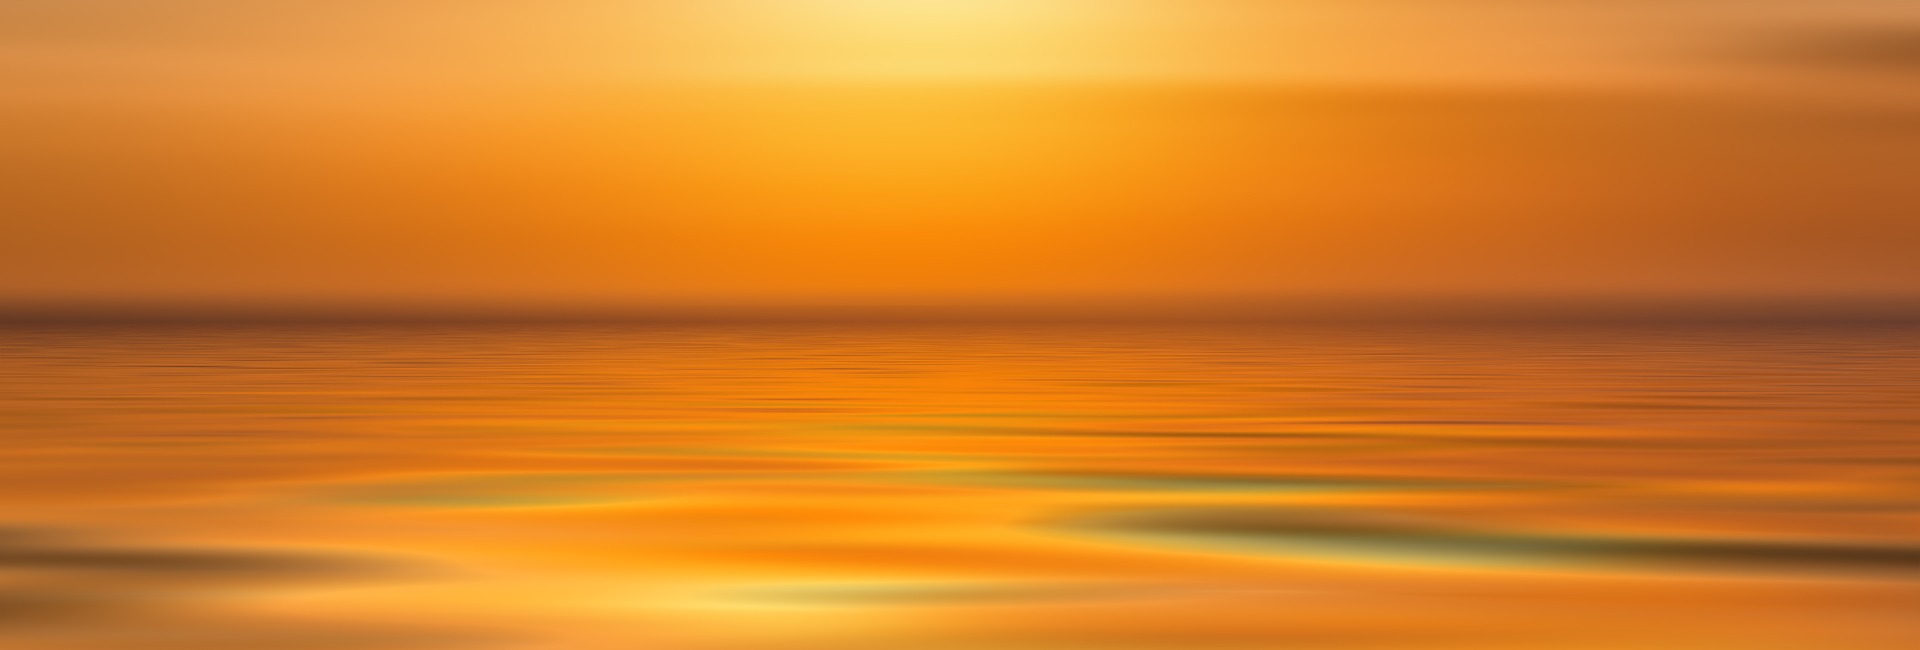 Bild: sunset-2825964_1920 (Quelle: pixabay.com)